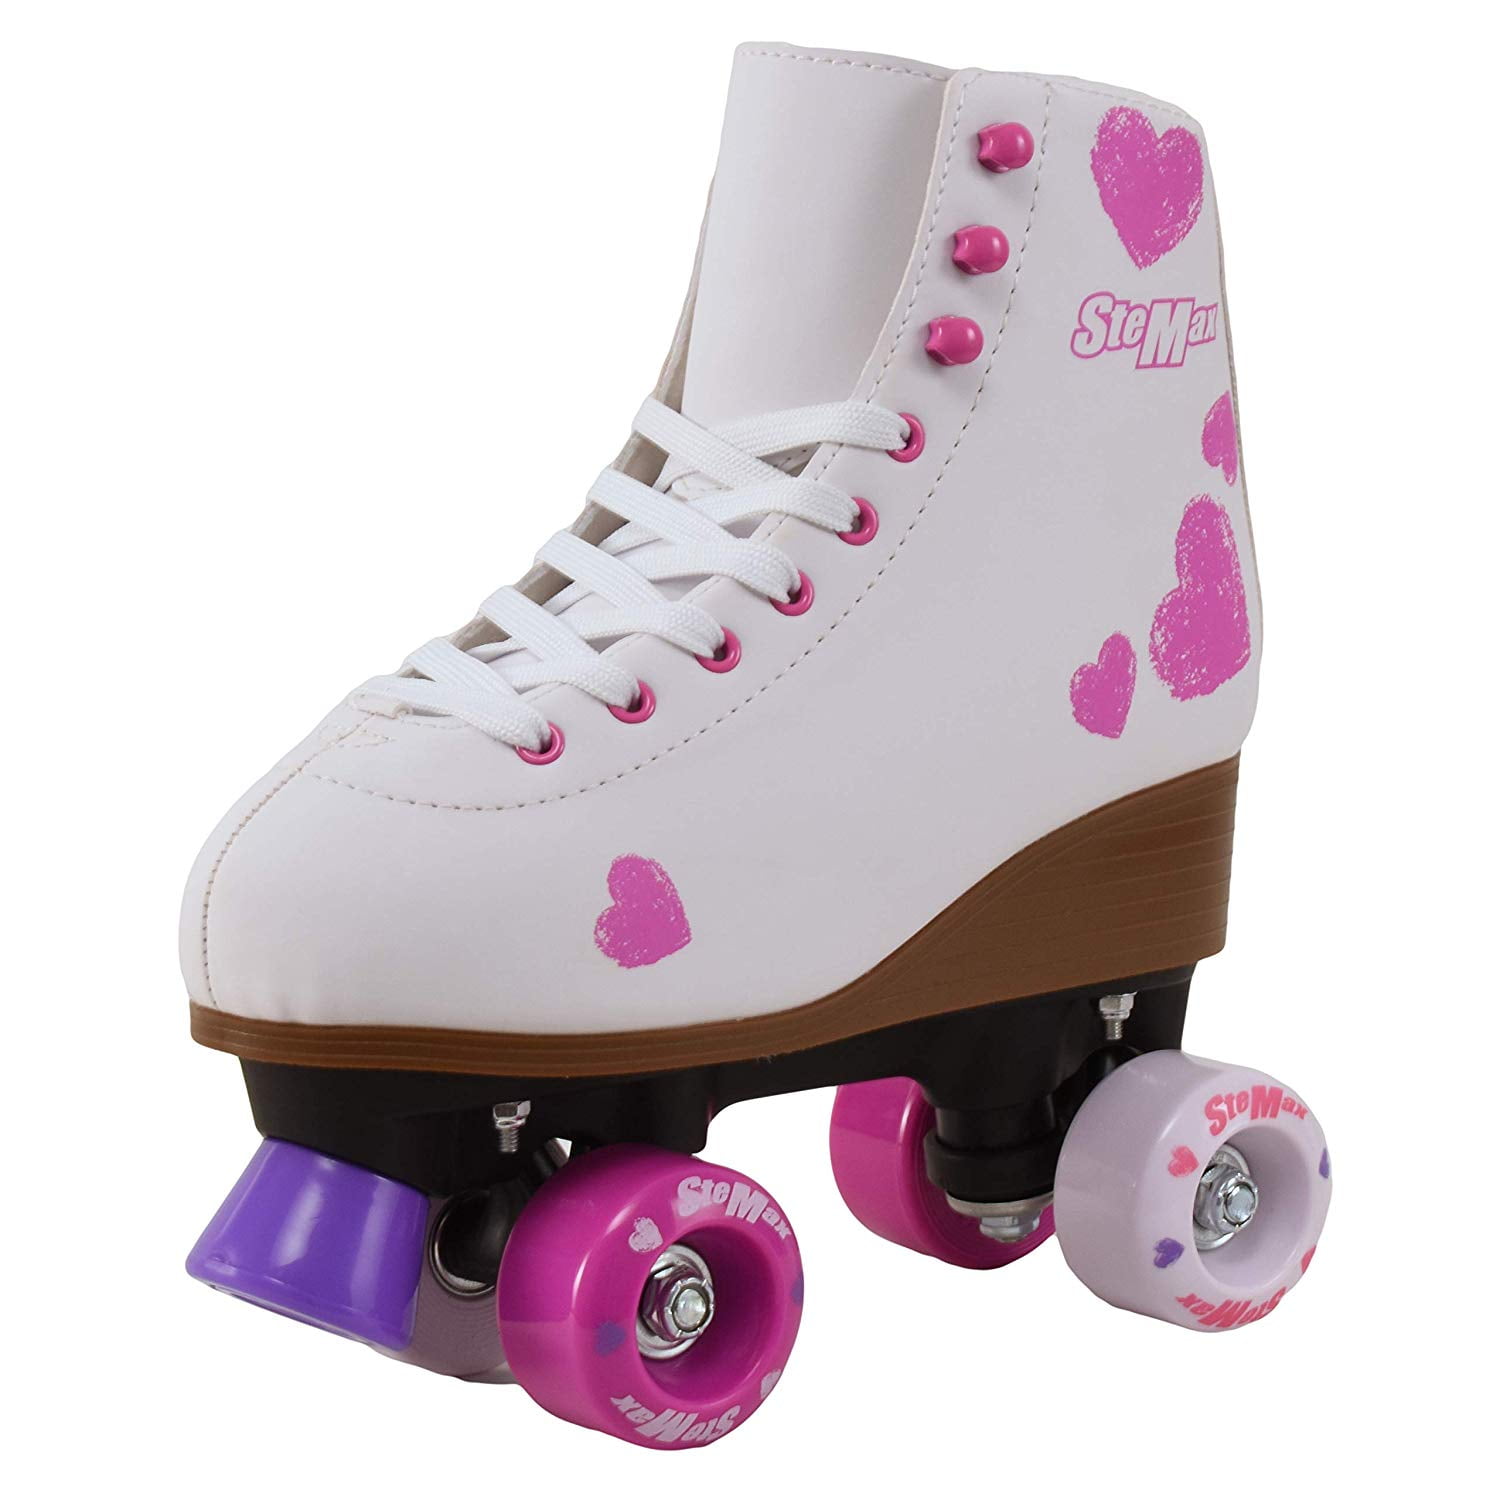 CAROMA-21 Kids Youth Roller Skates Girls Boys Quad Skates Size J10-Men 5 Pink 